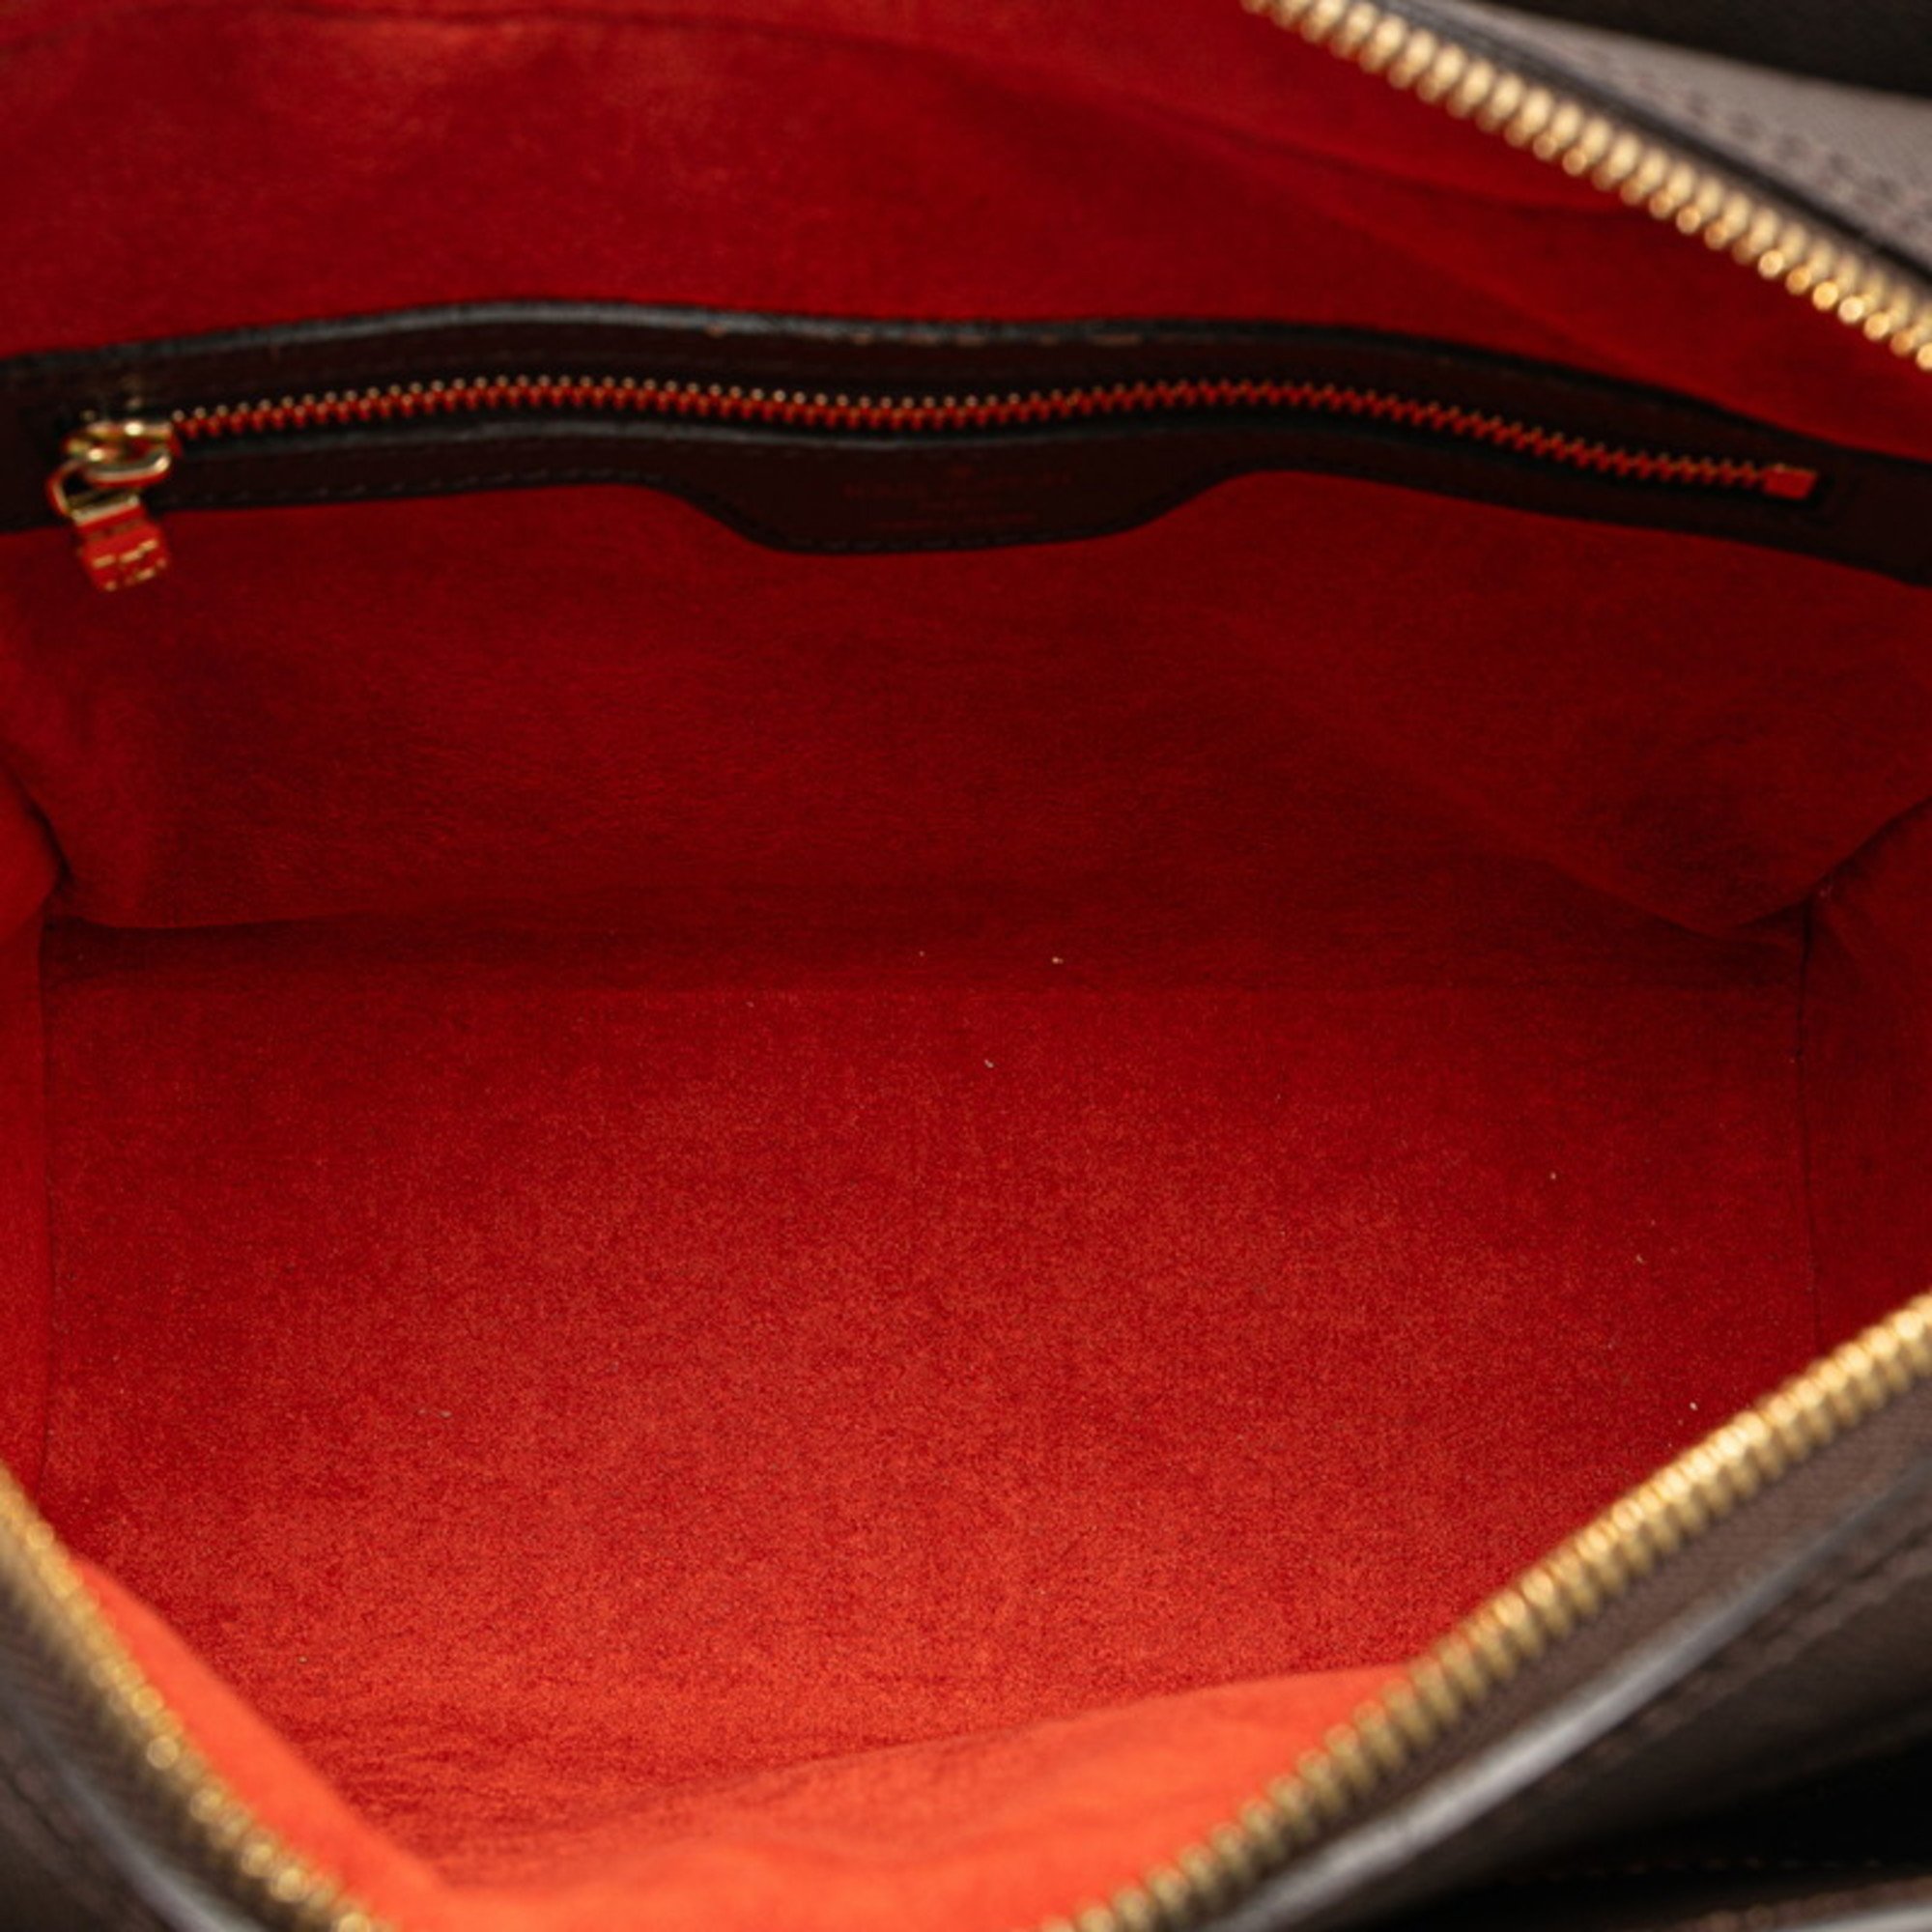 Louis Vuitton Damier Triana Handbag N51155 Brown PVC Leather Women's LOUIS VUITTON